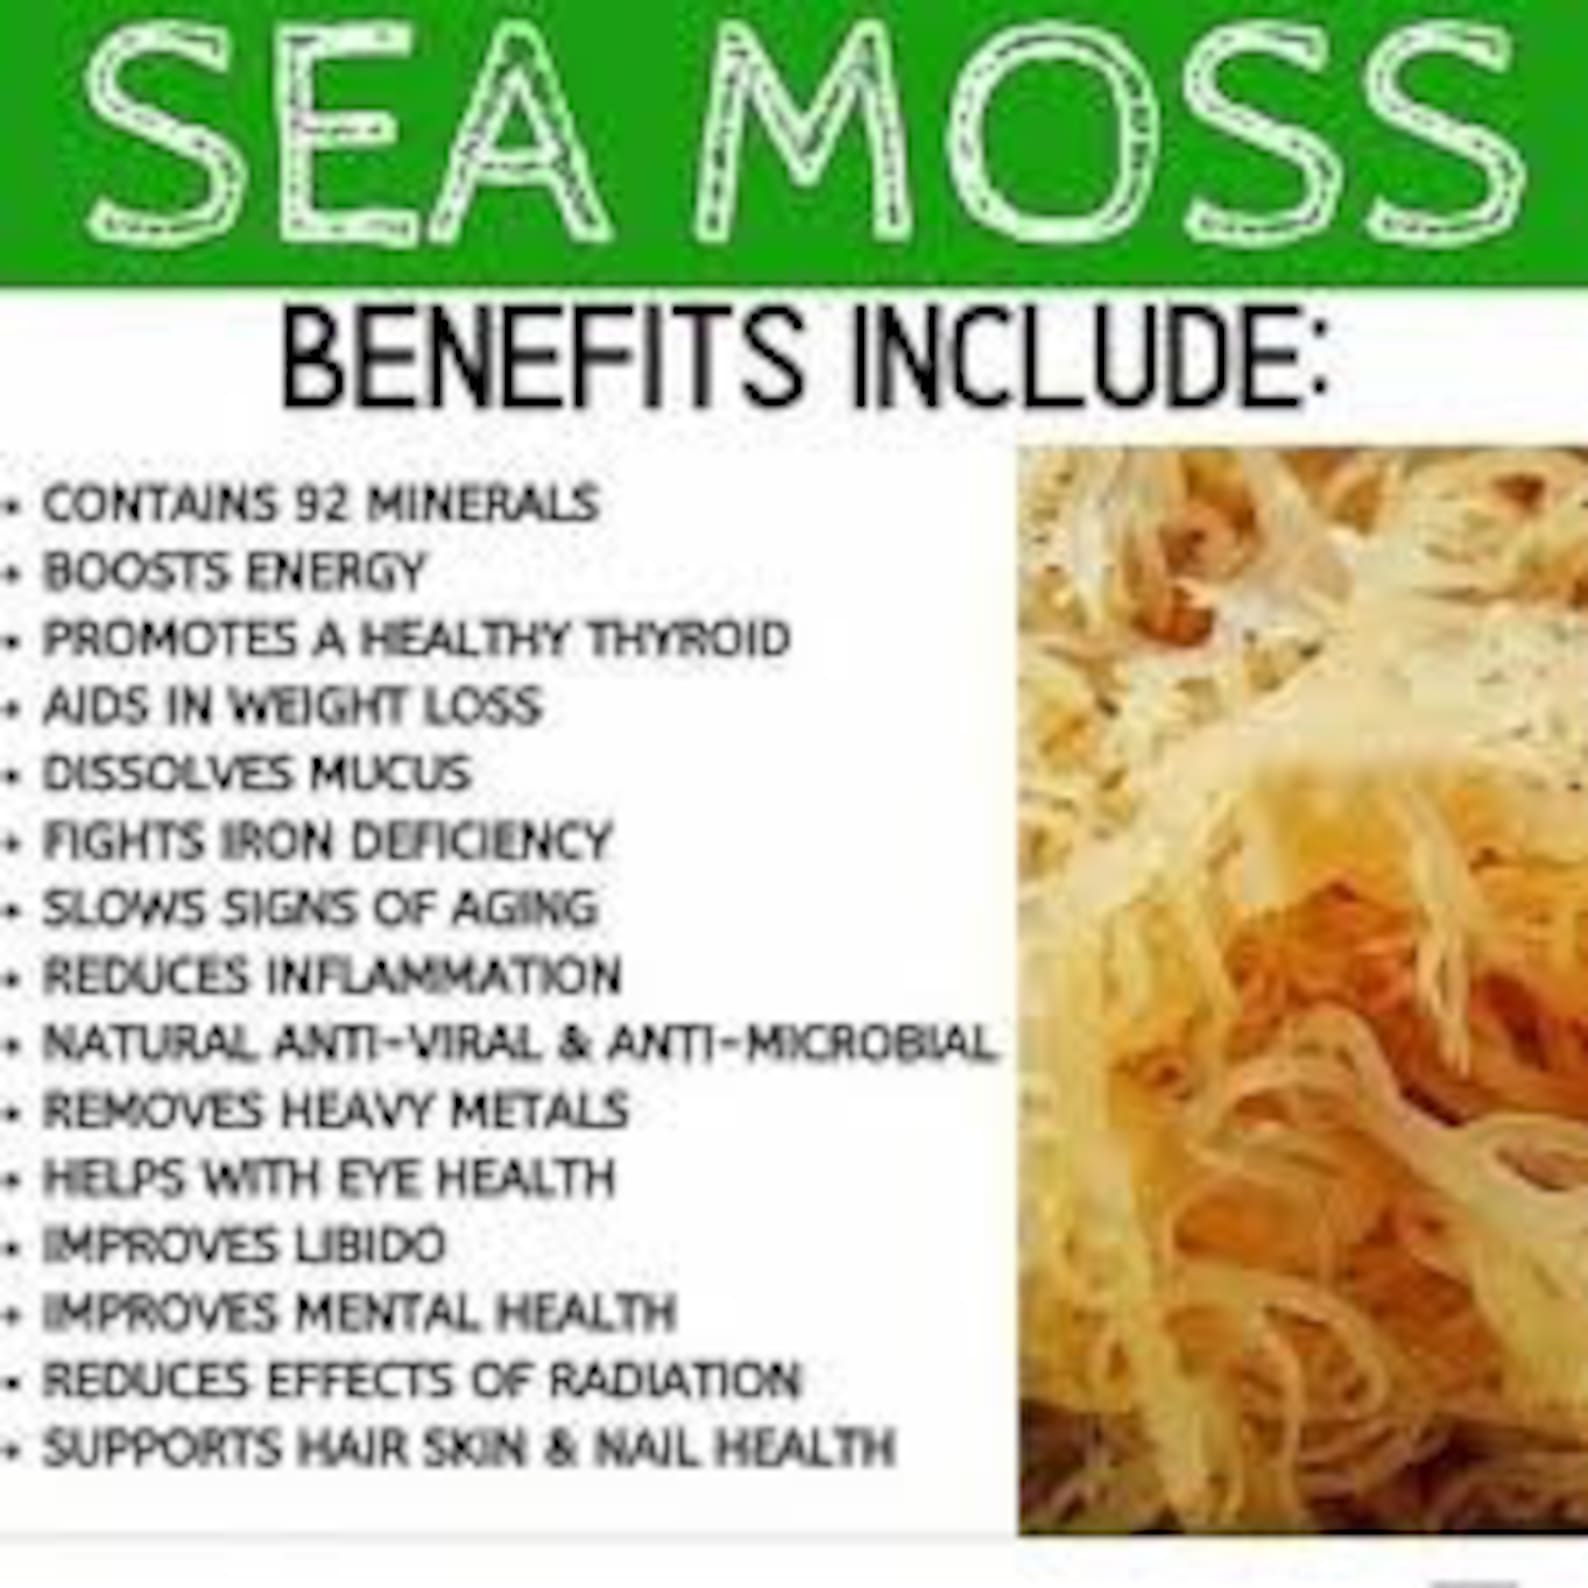 Buy 2 Get 1 FREE Dr. Sebi Grade Irish Sea Moss Hair and Body | Etsy